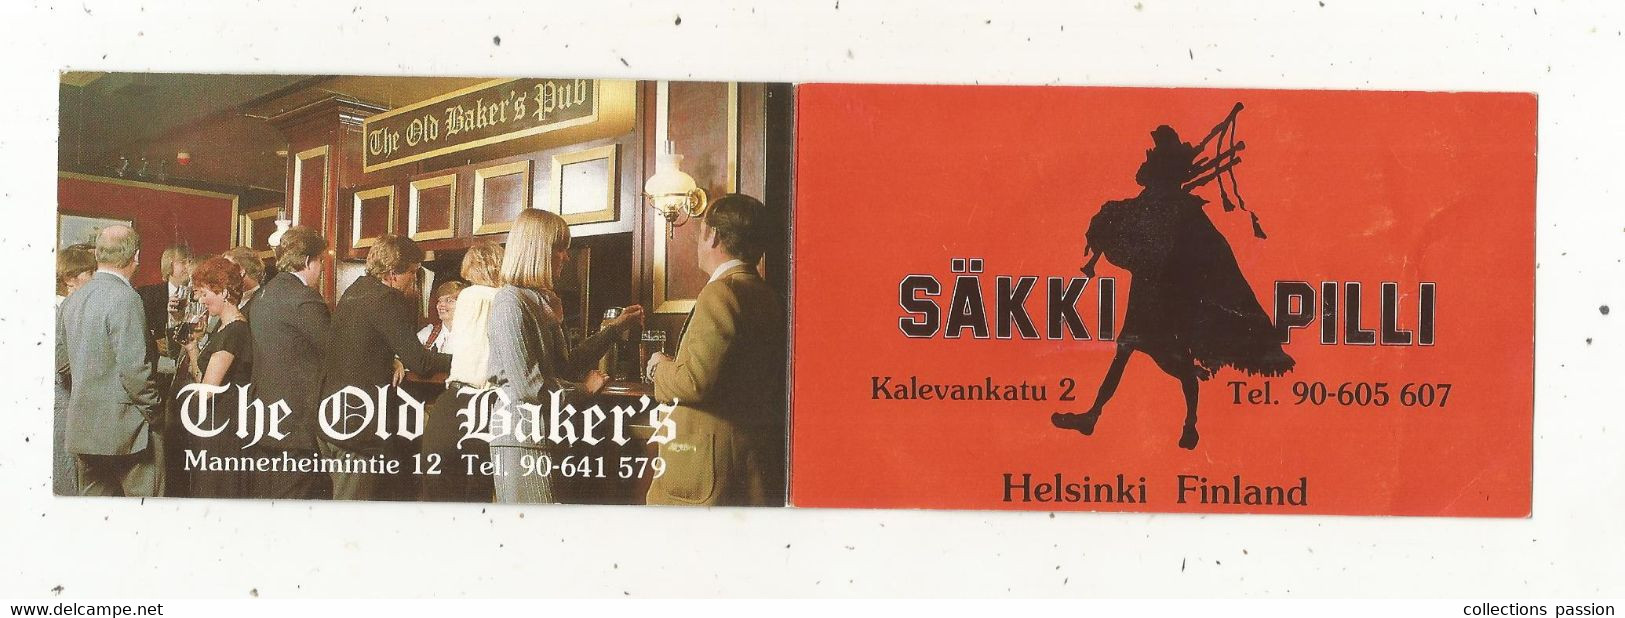 Carte De Visite, FINLAND,  FINLANDE,  HELSINKI,  SÄKKI PILLI , THE OLD BAKER'S, Pubs , Restaurants...2 Scans - Cartes De Visite